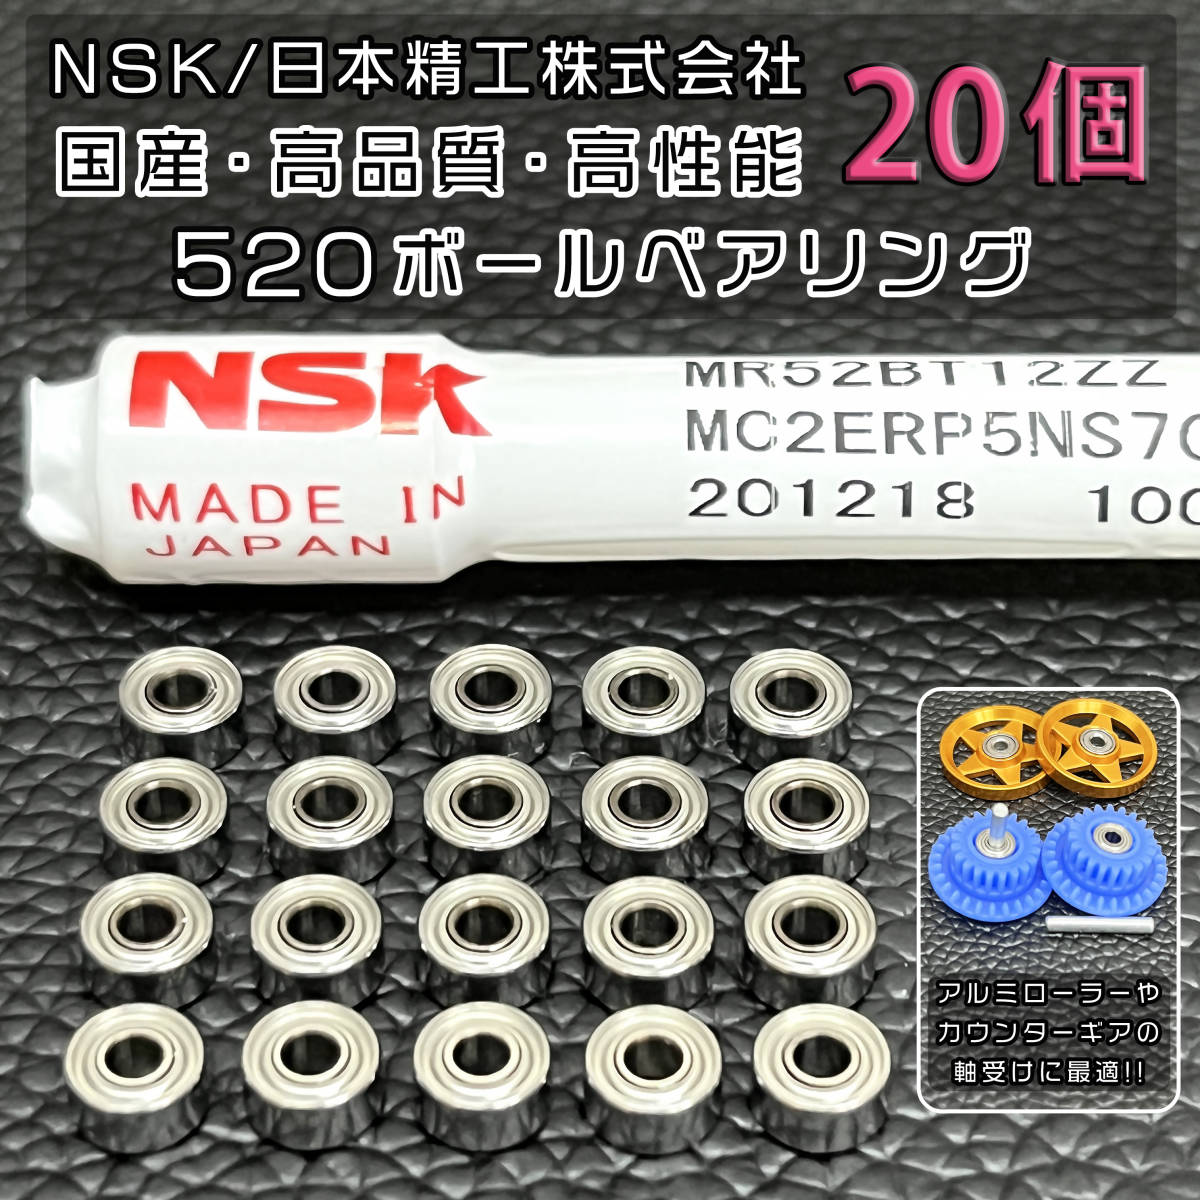 NSK 日本精工(株) 高性能 520ボールベアリング 20個 ミニ四駆 通販